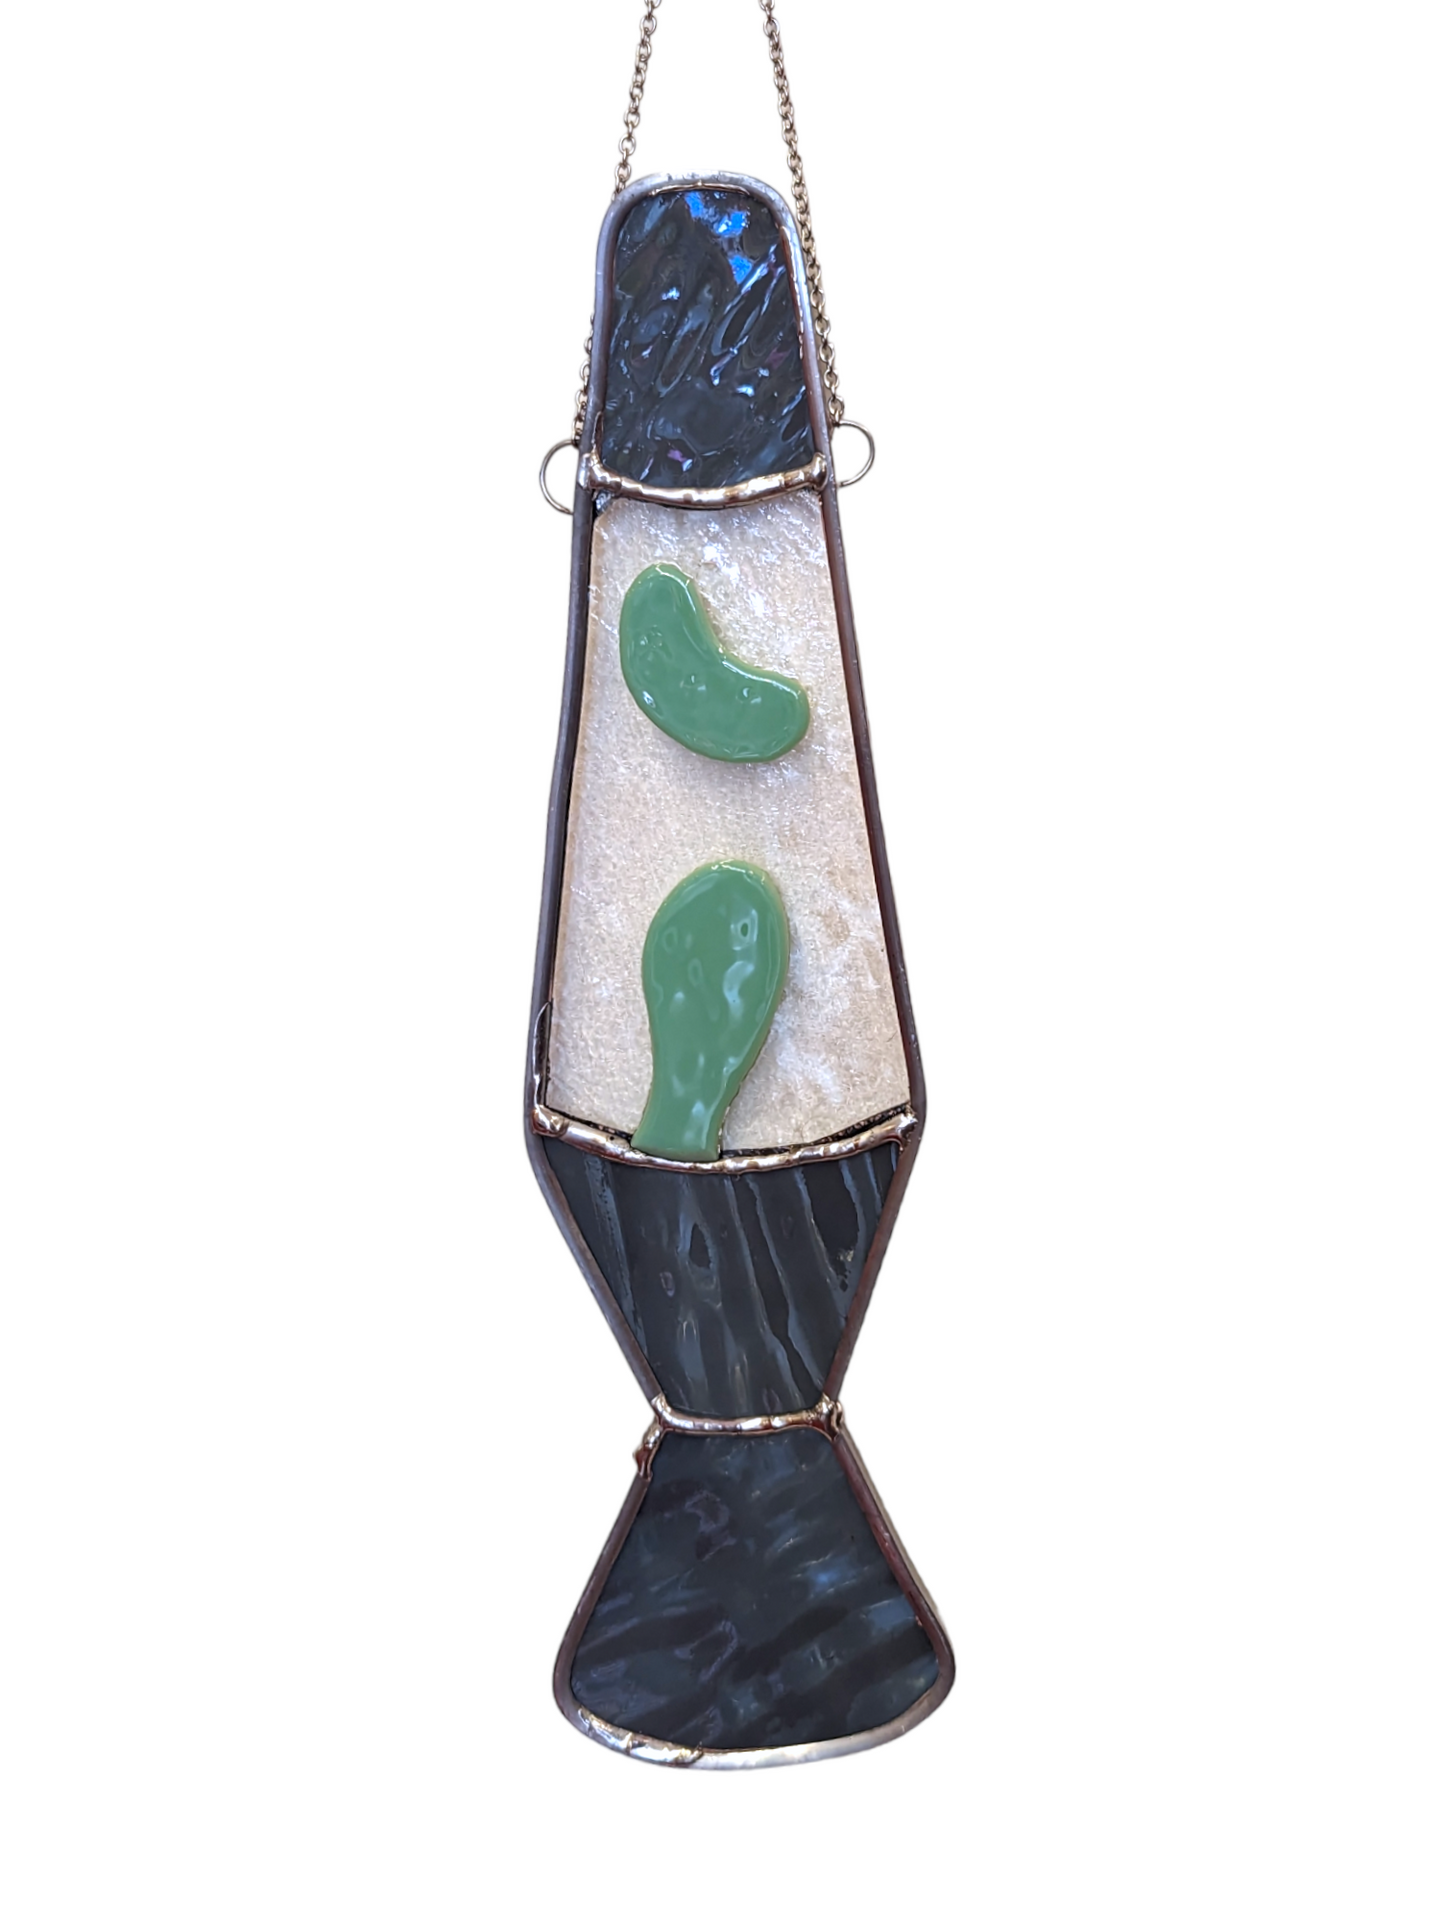 Handmade Lava Lamp Sun Catcher by Overcast Goods